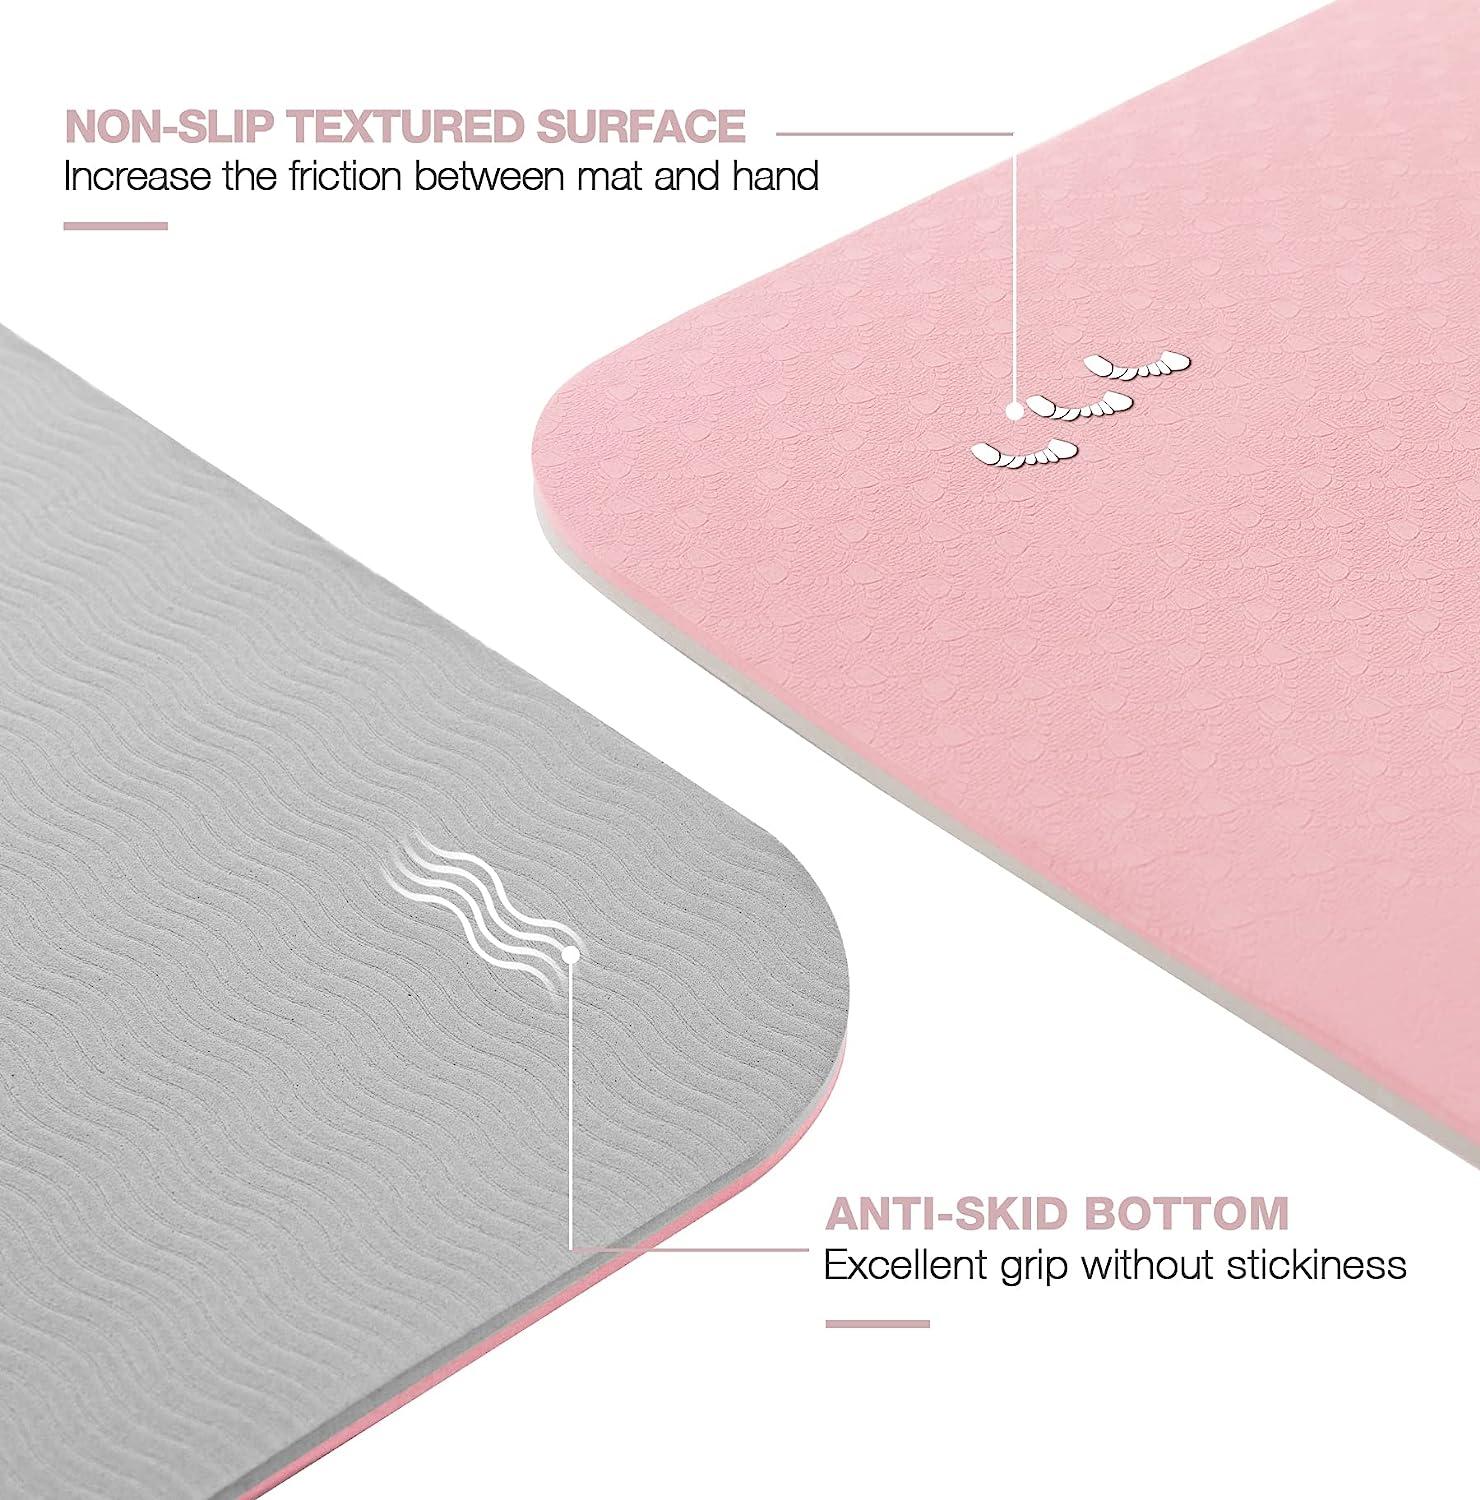 Yoga Mat, Premium 1/4 inch Imprint Non Slip Extra Thick Fitness